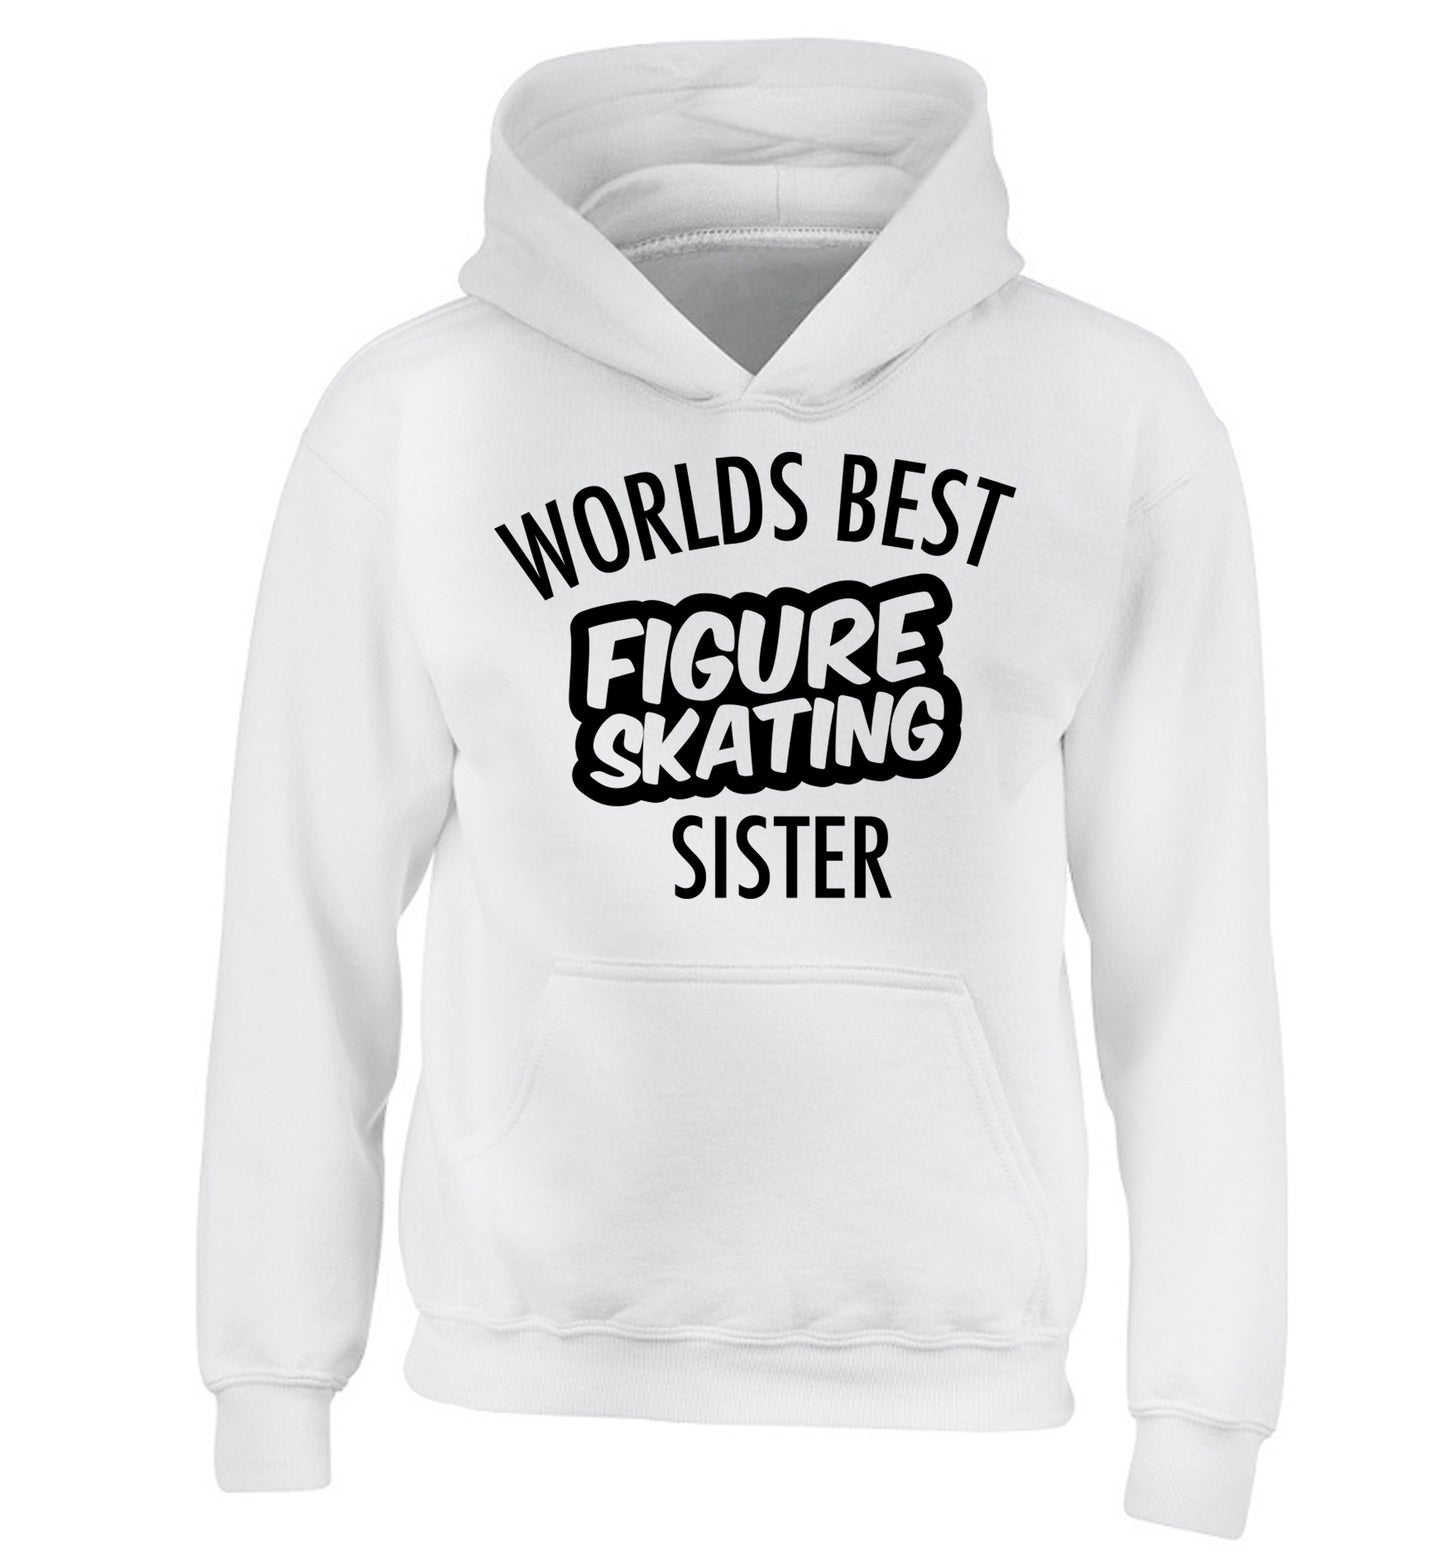 Worlds best figure skating sisterchildren's white hoodie 12-14 Years